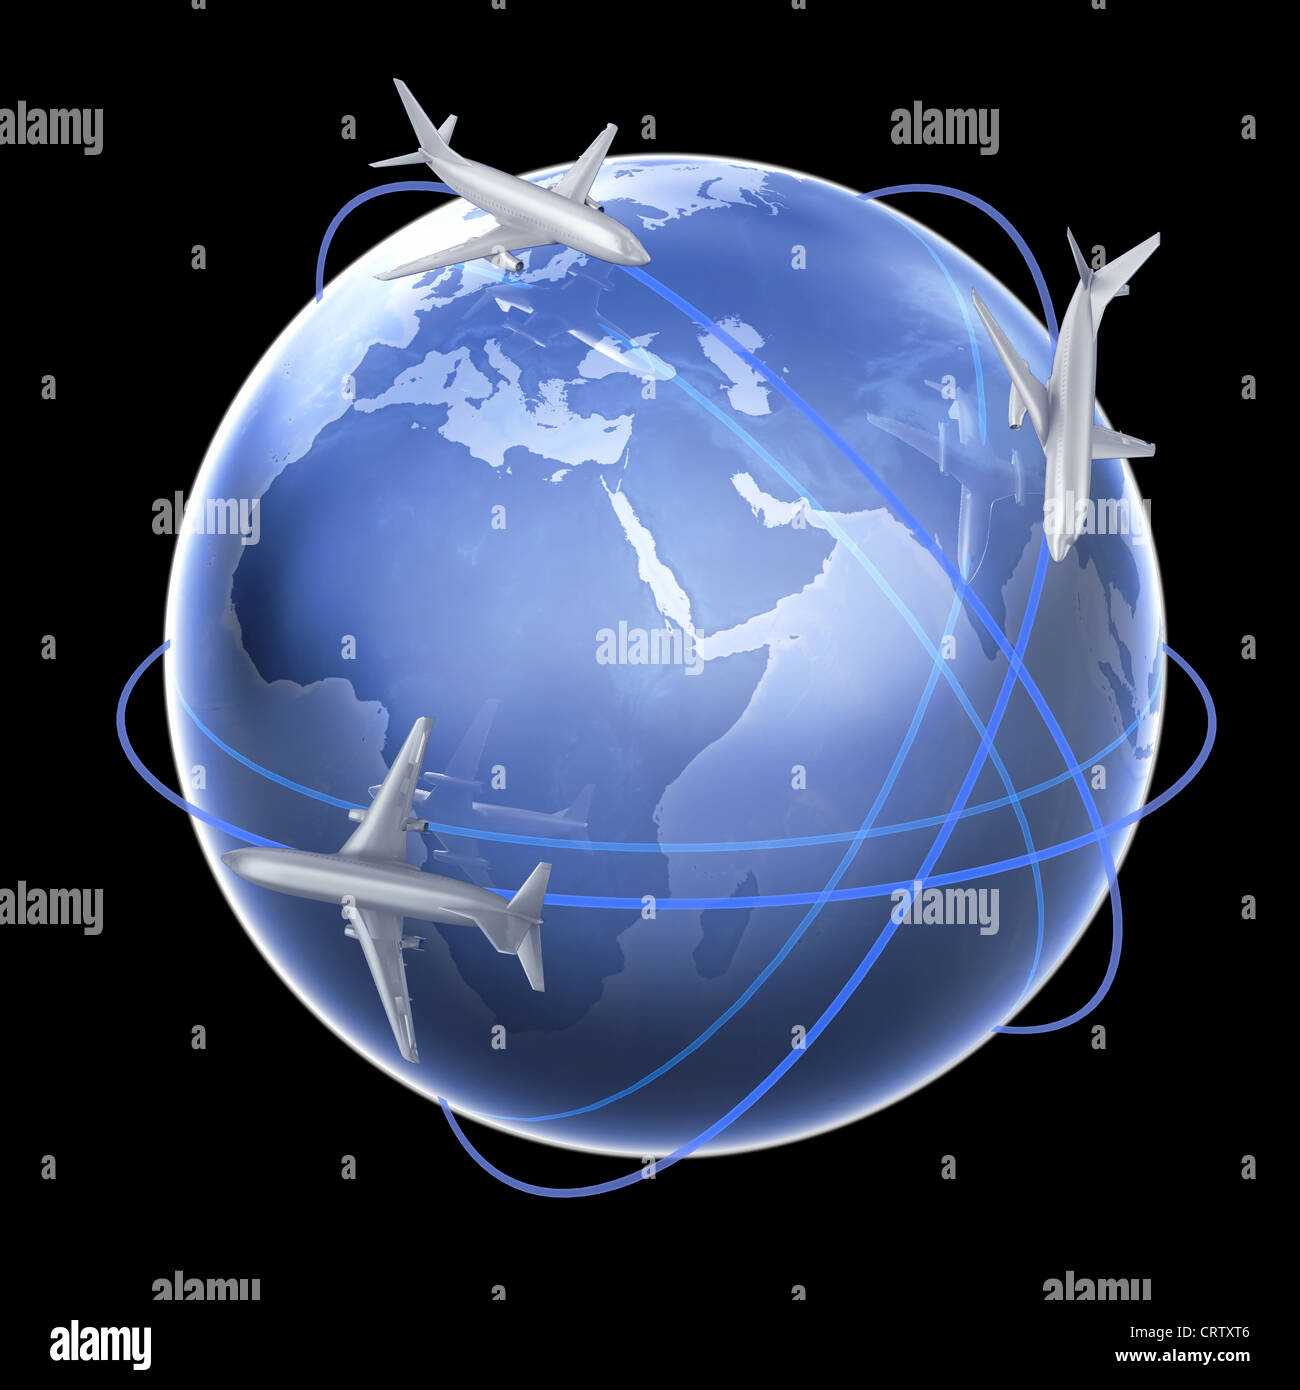 Three airplanes around th eglobe - air travel concept illustration Stock Photo